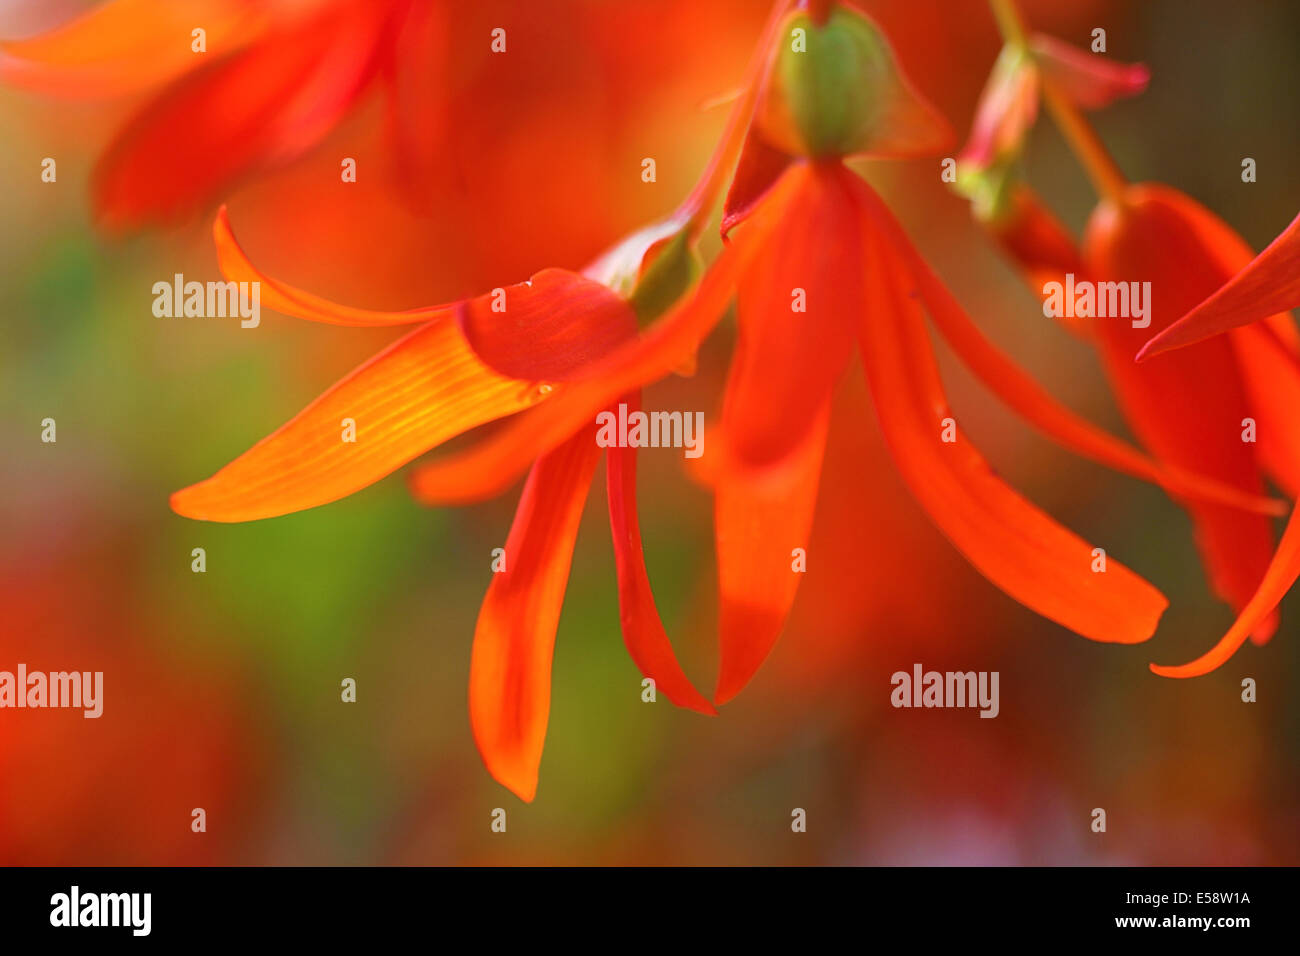 Begonia e imágenes de alta resolución - Alamy